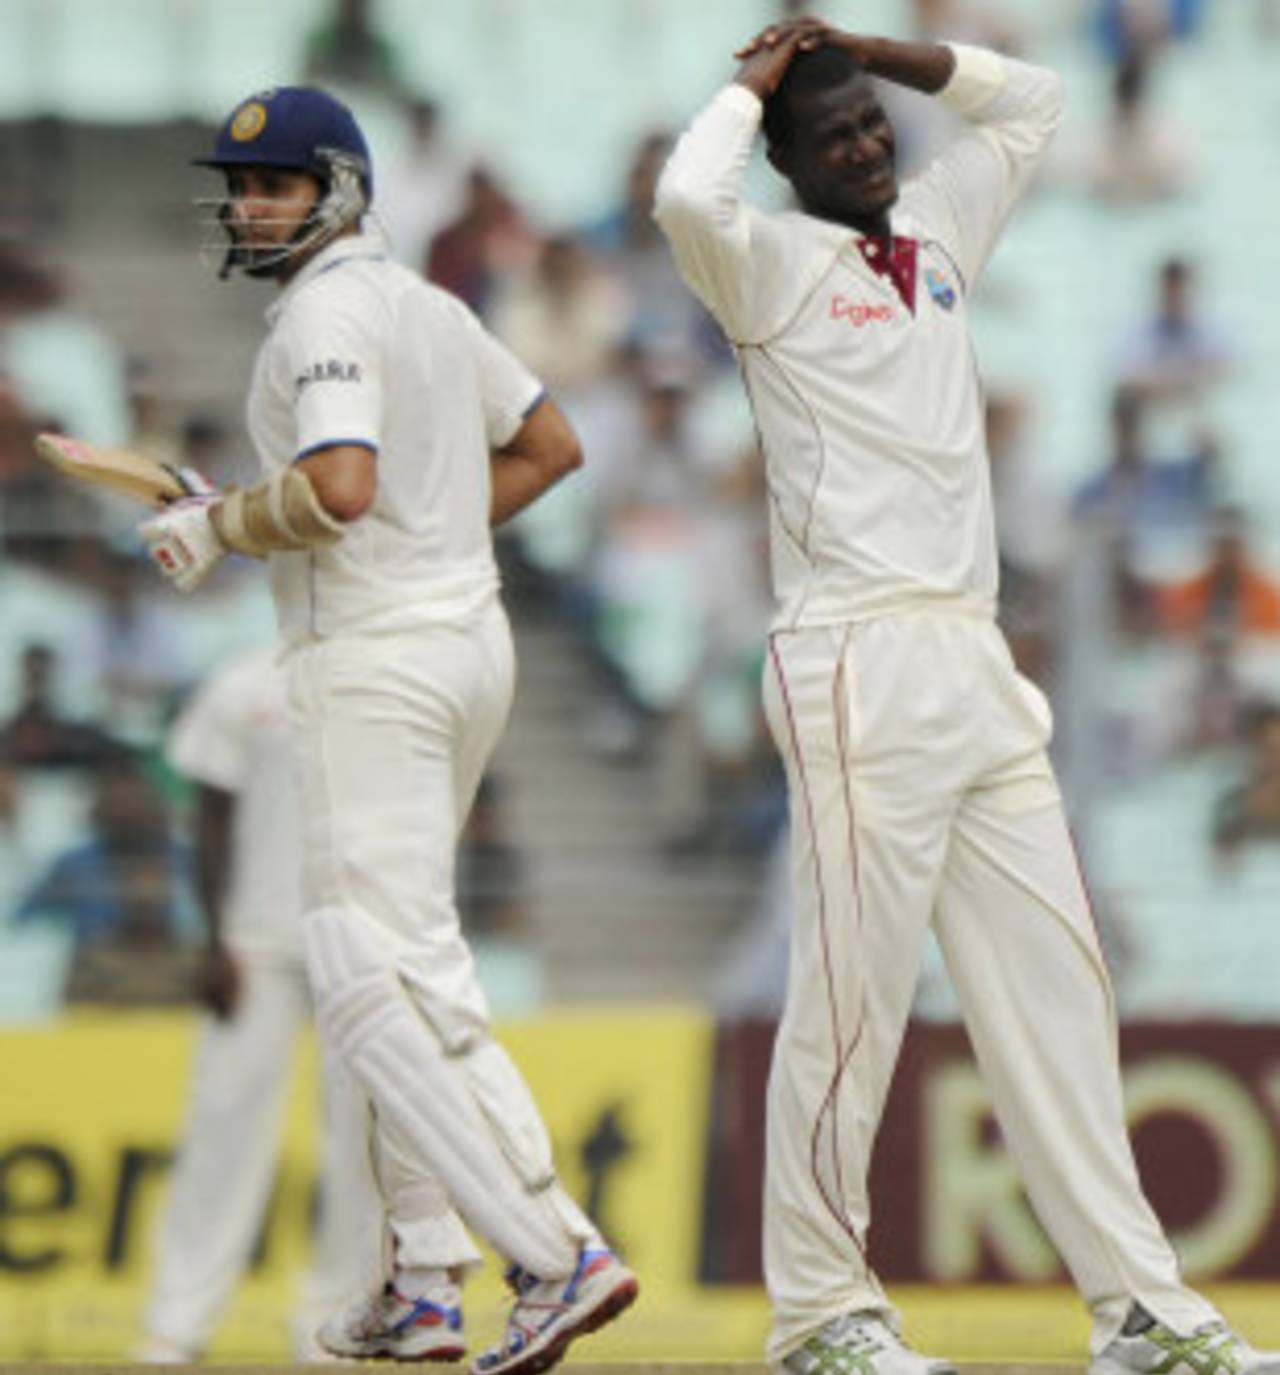 Darren Sammy reacts to more runs off VVS Laxman's bat, India v West Indies, 2nd Test, Kolkata, 2nd day, November 15, 2011